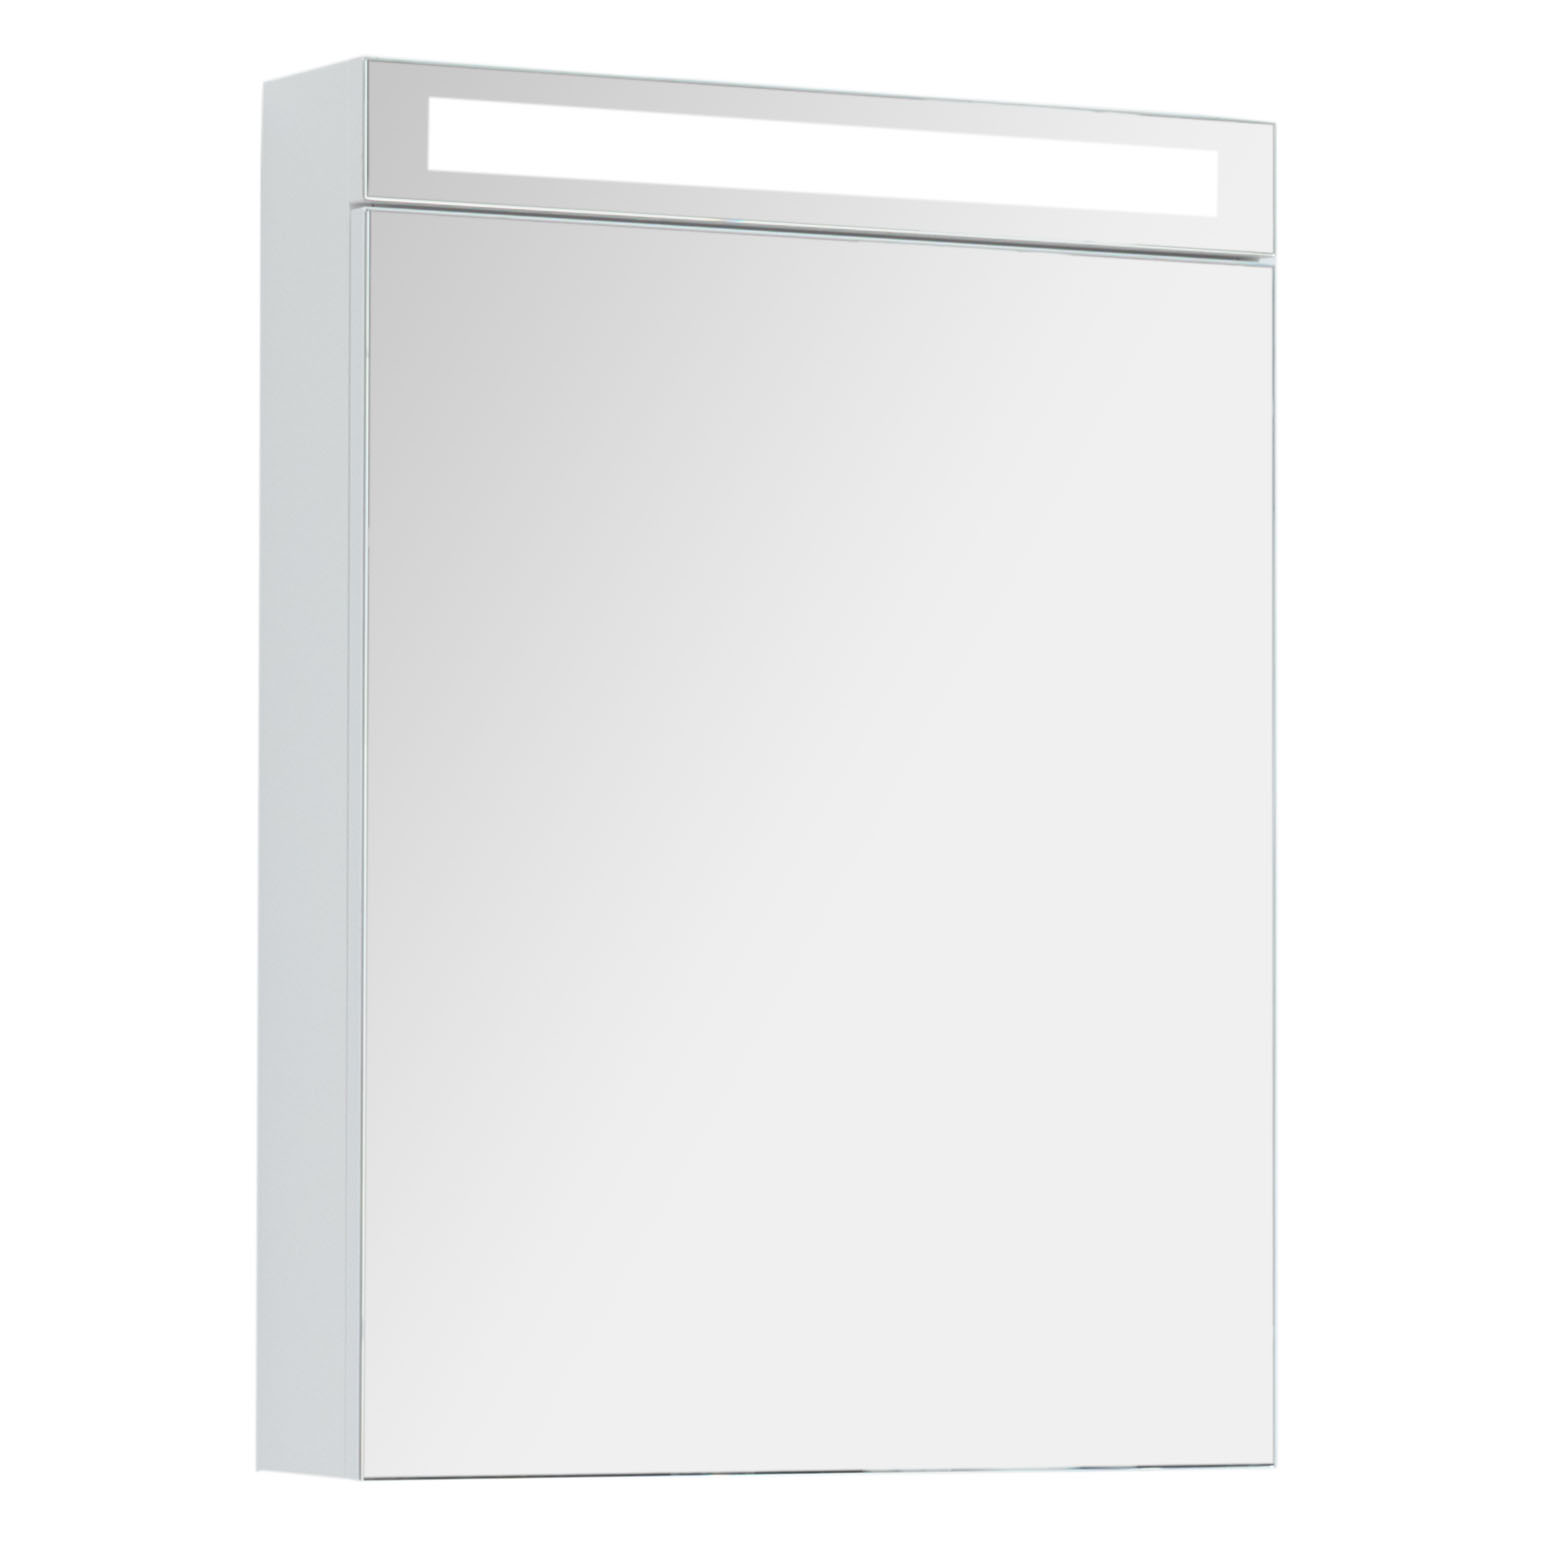 Зеркальный шкаф для ванной Dreja Max 60 белый глянец зеркальный шкаф для ванной roca gap 70 белый глянец